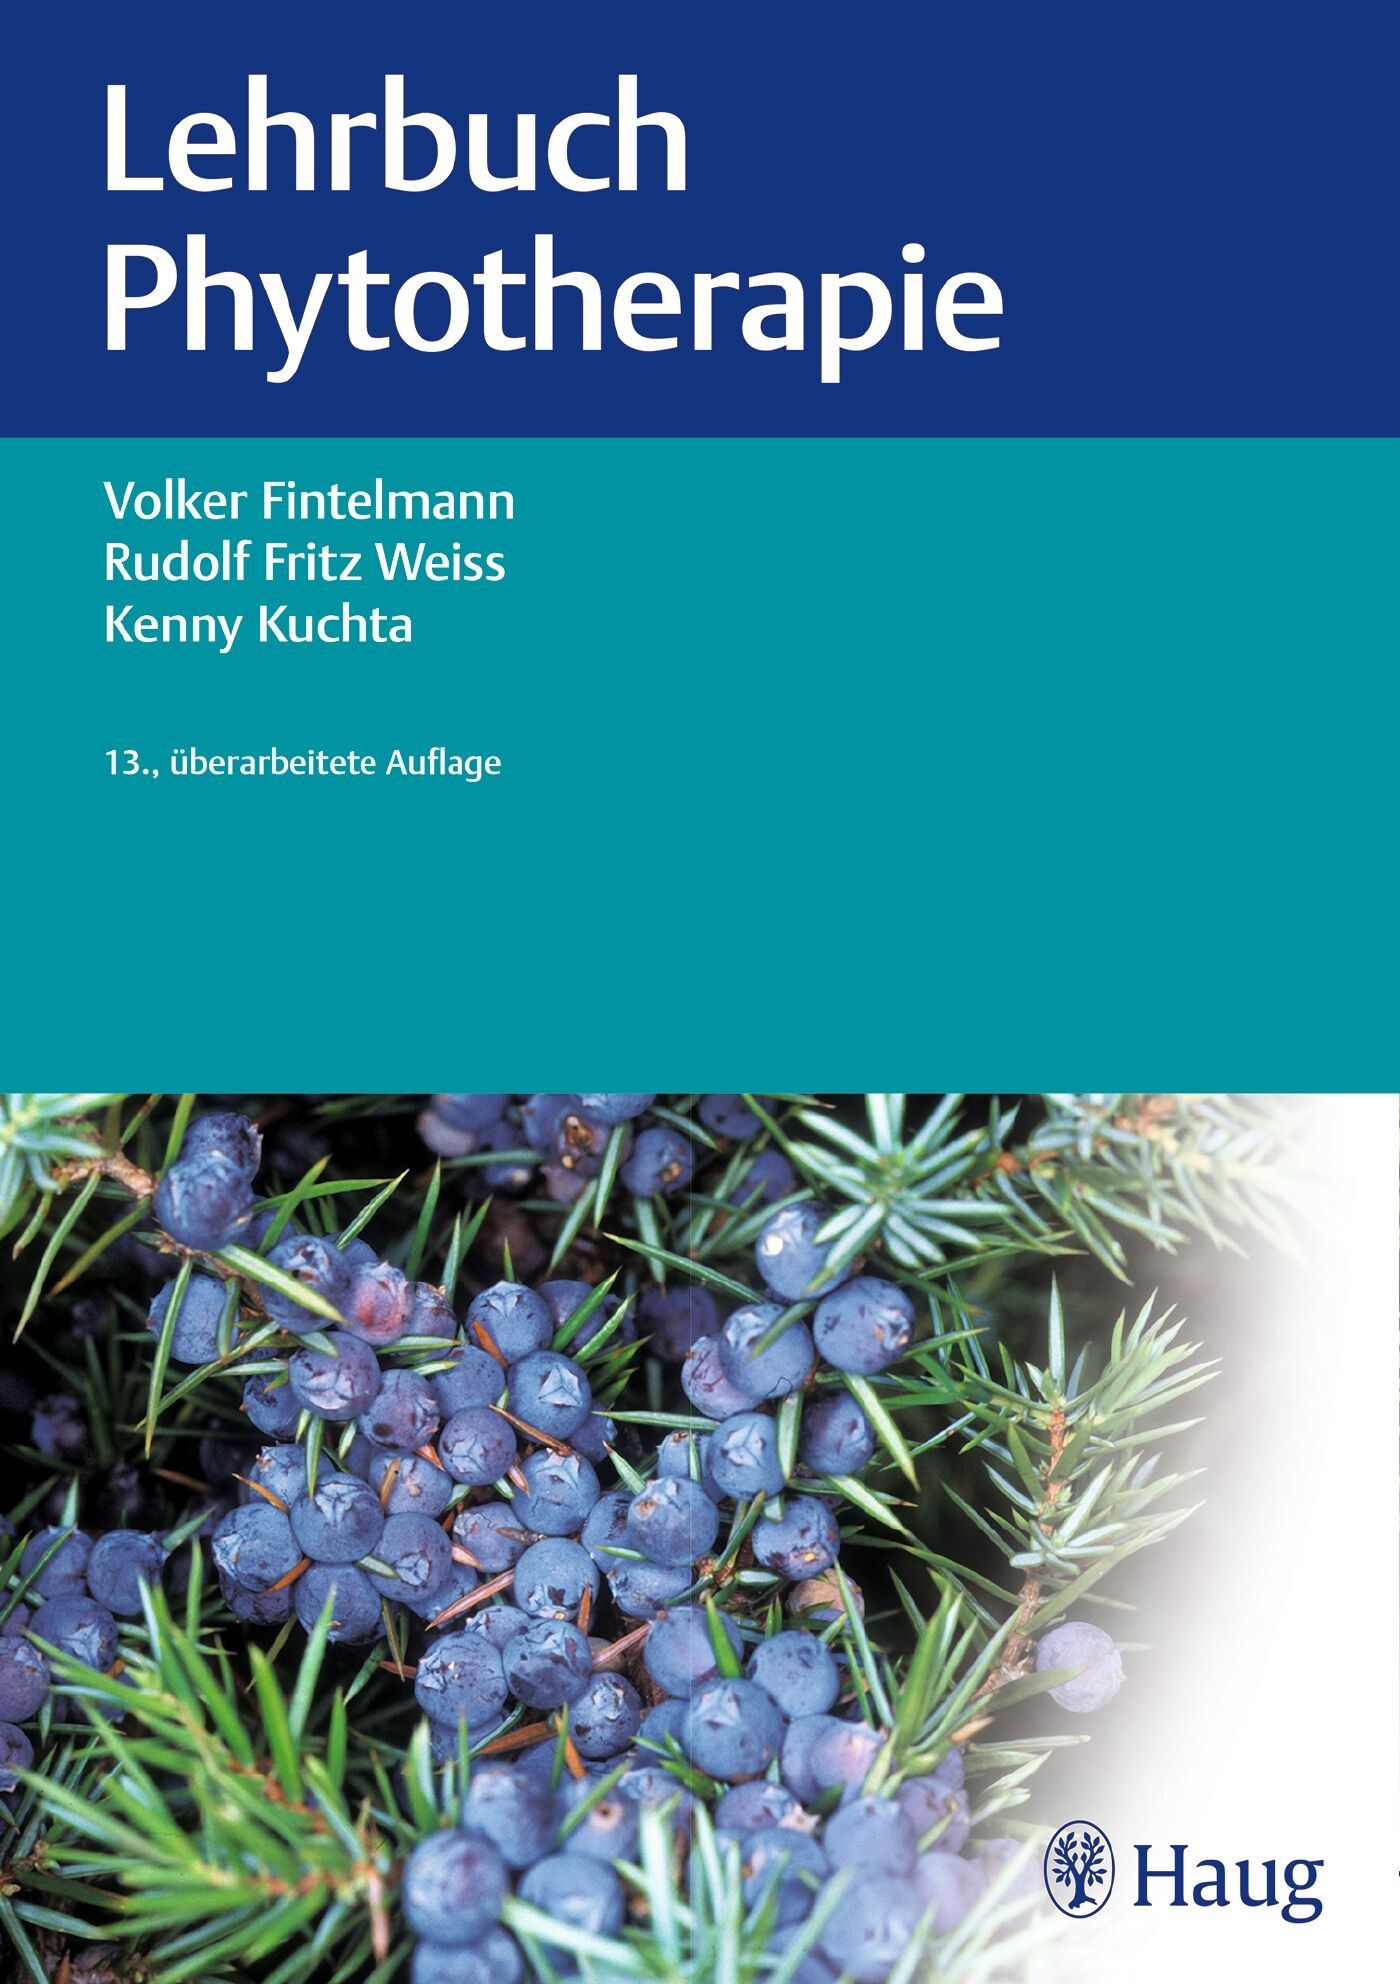 Lehrbuch Phytotherapie, 9783132400153